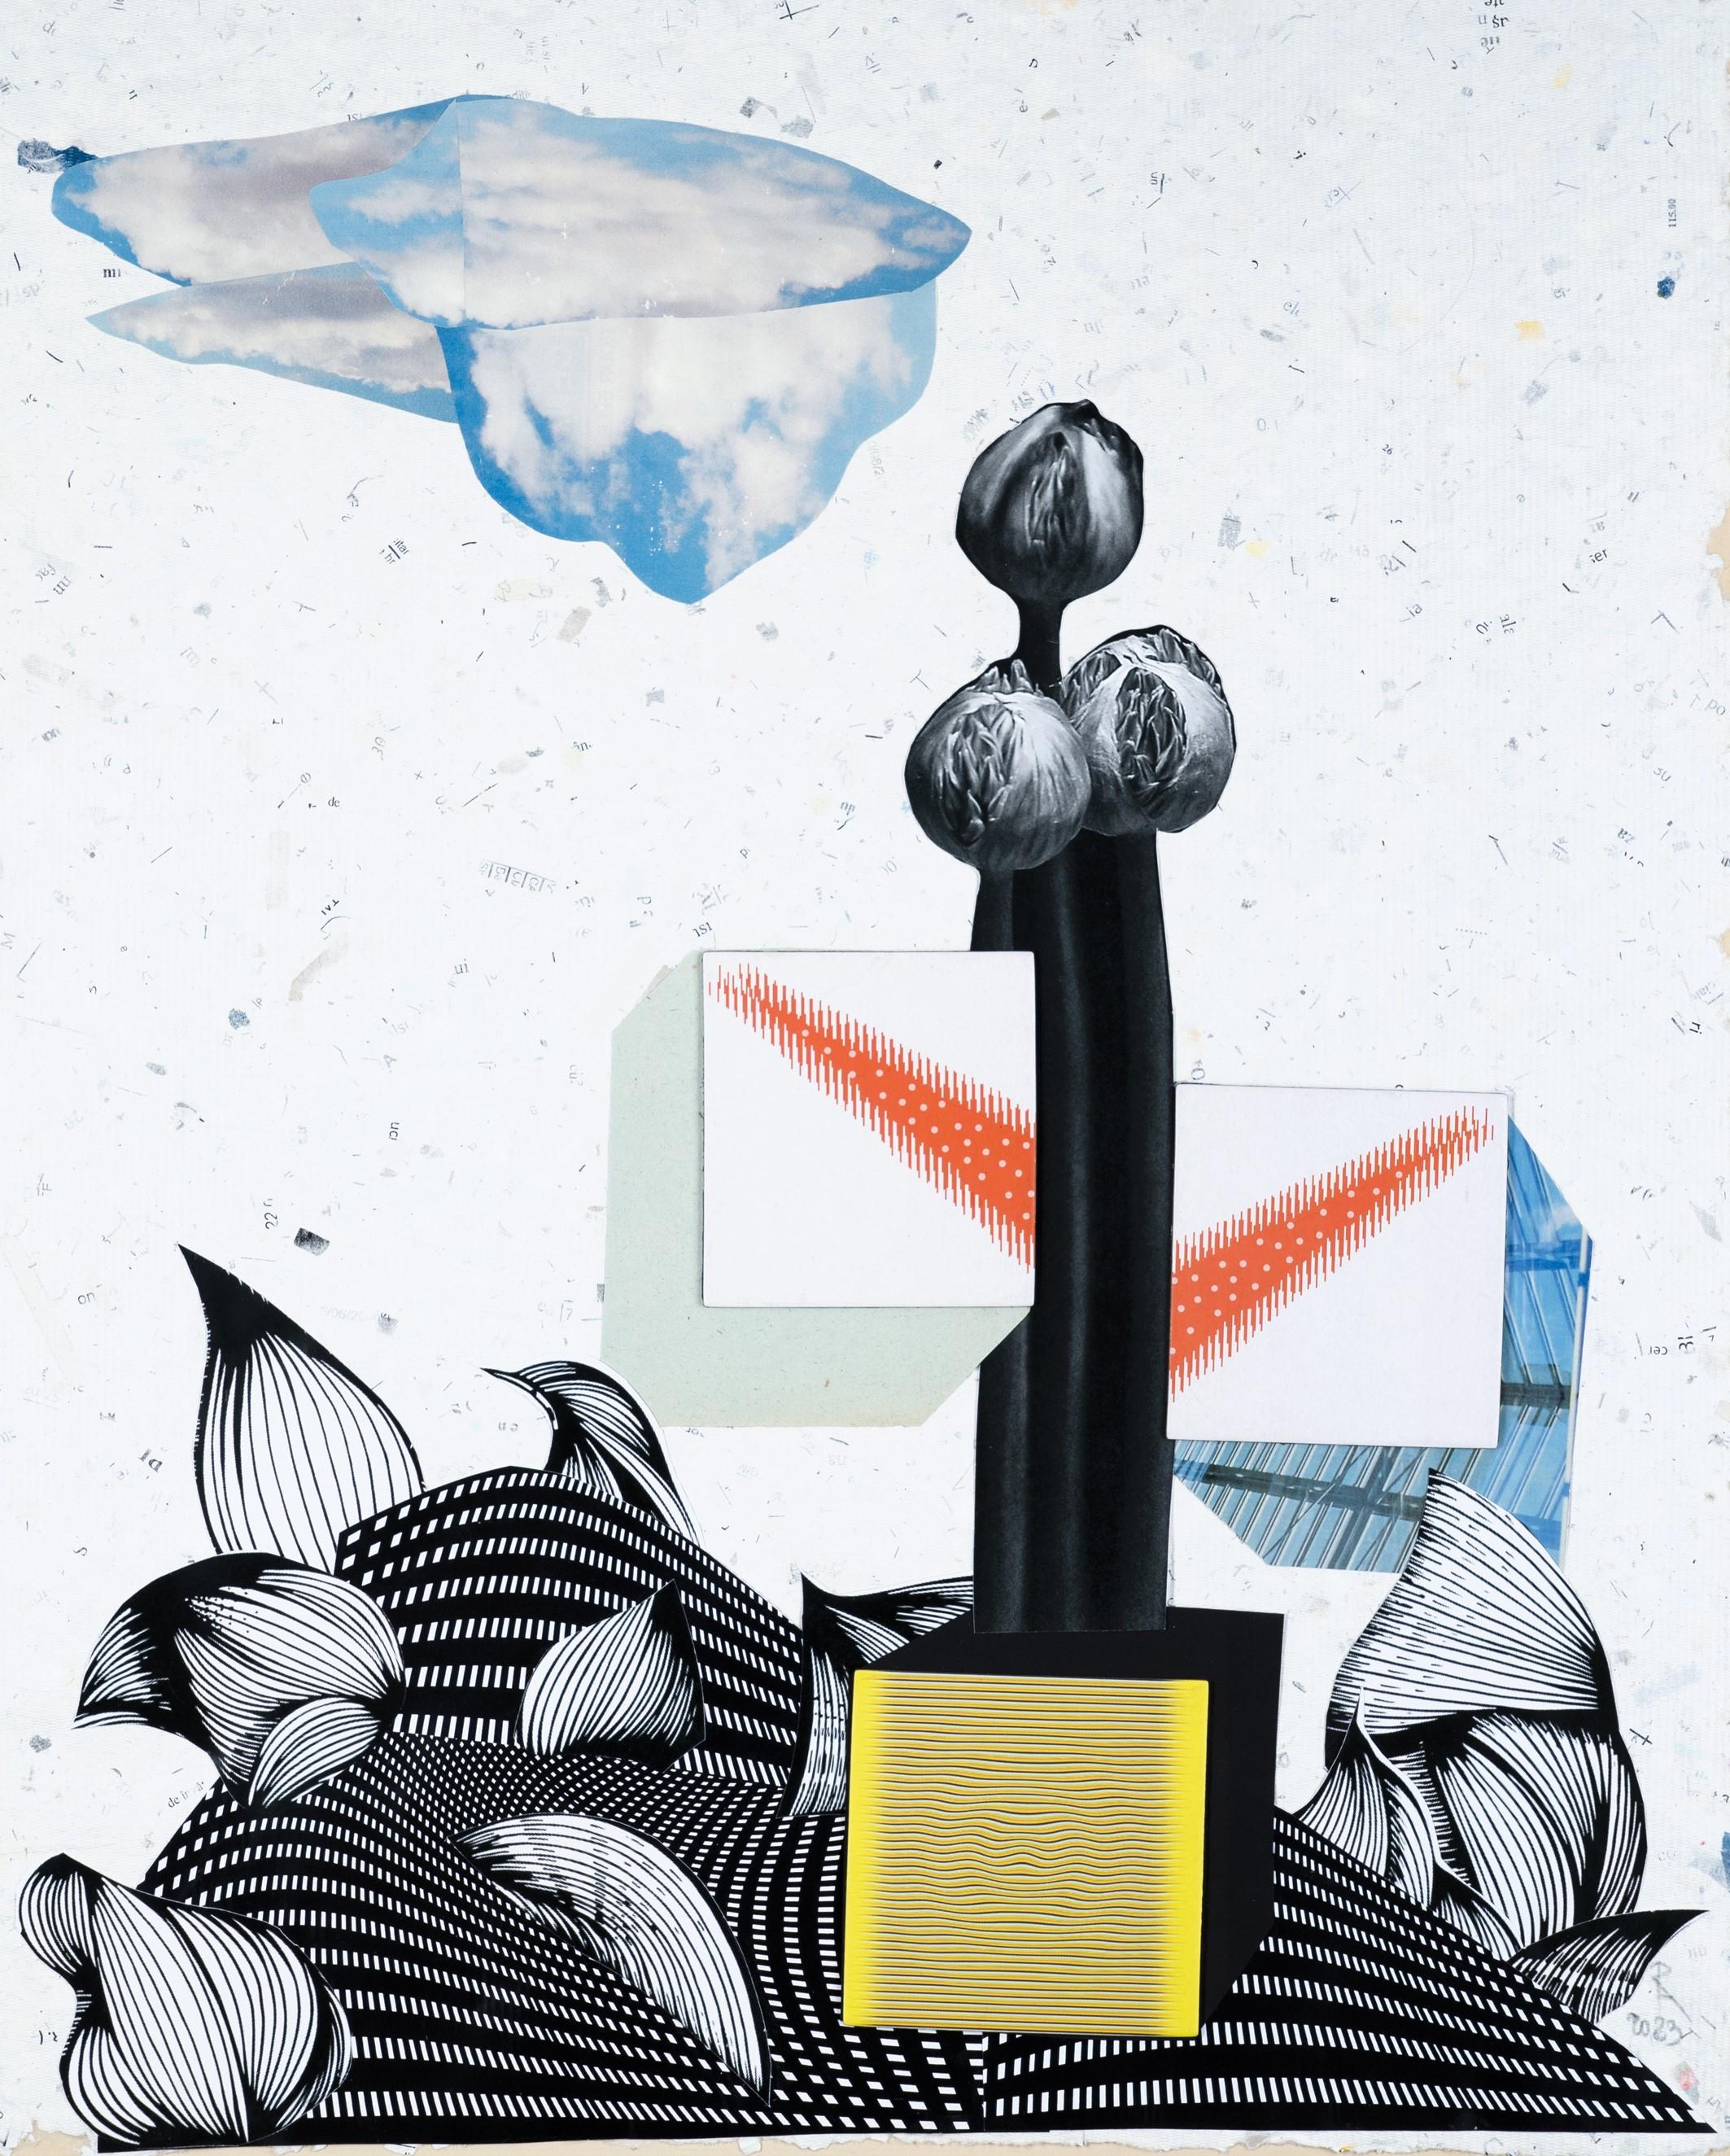 The Flower - Paper, Landscape, Collage, 21st Century, Surrealism - Contemporary Mixed Media Art by Raluca Arnăutu